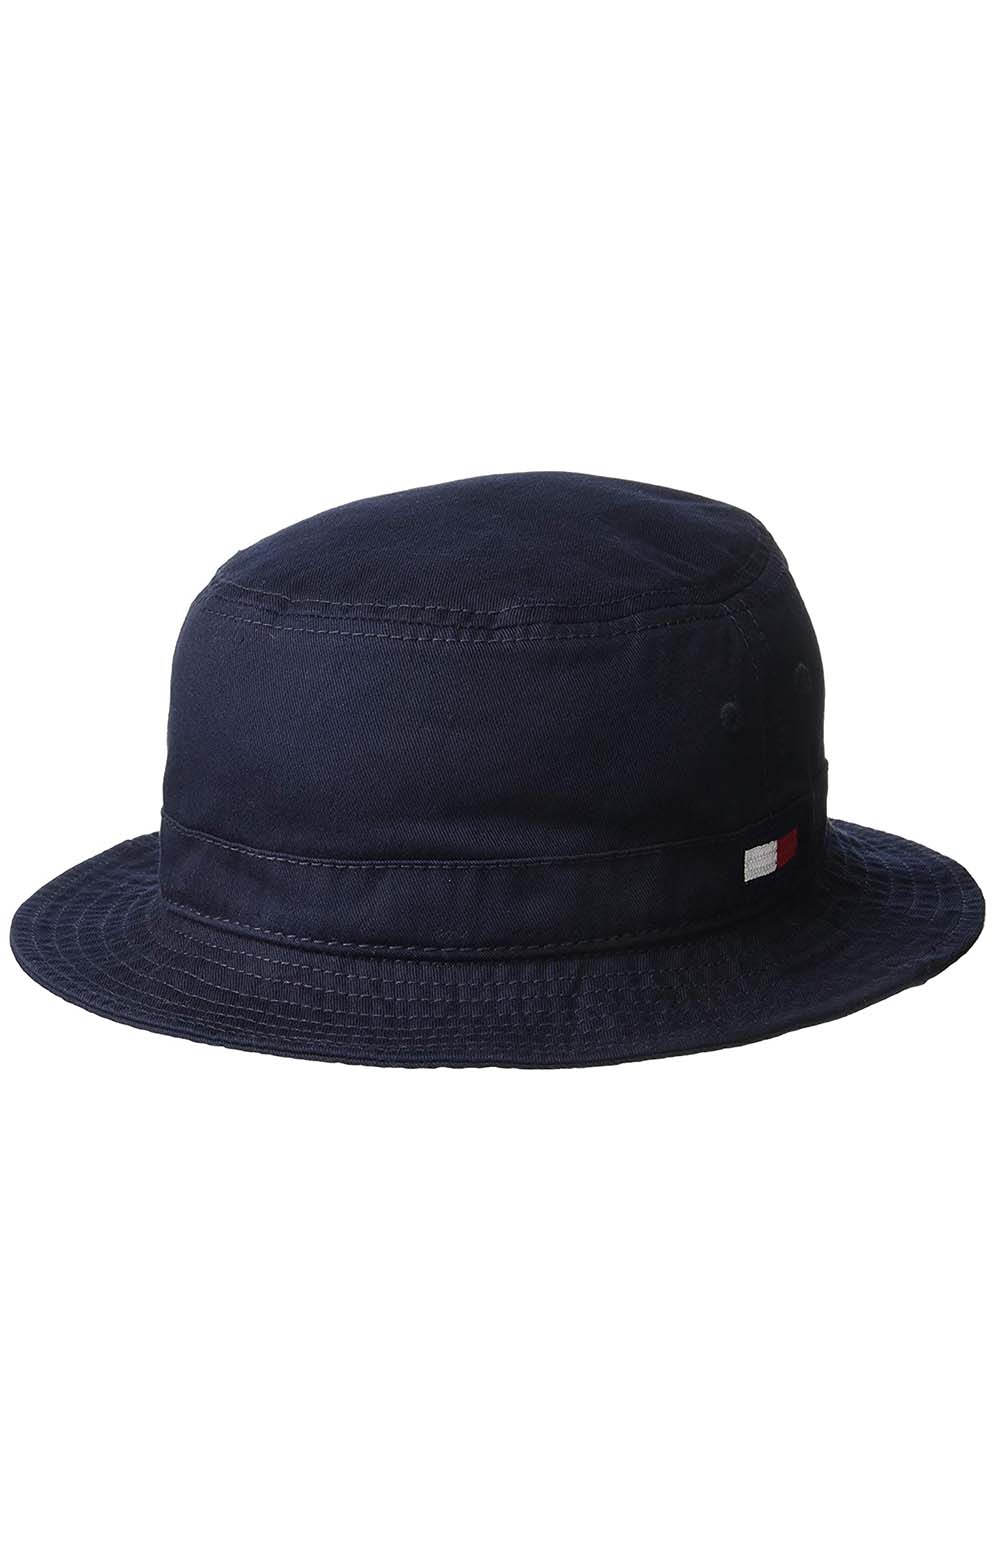 Ardin Bucket Hat - Navy